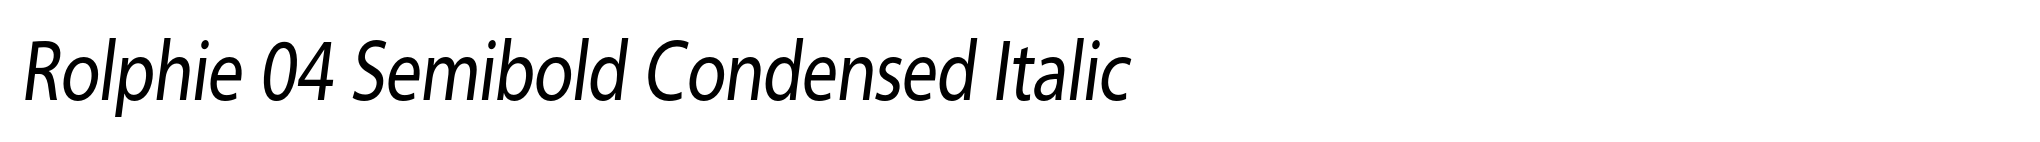 Rolphie 04 Semibold Condensed Italic image